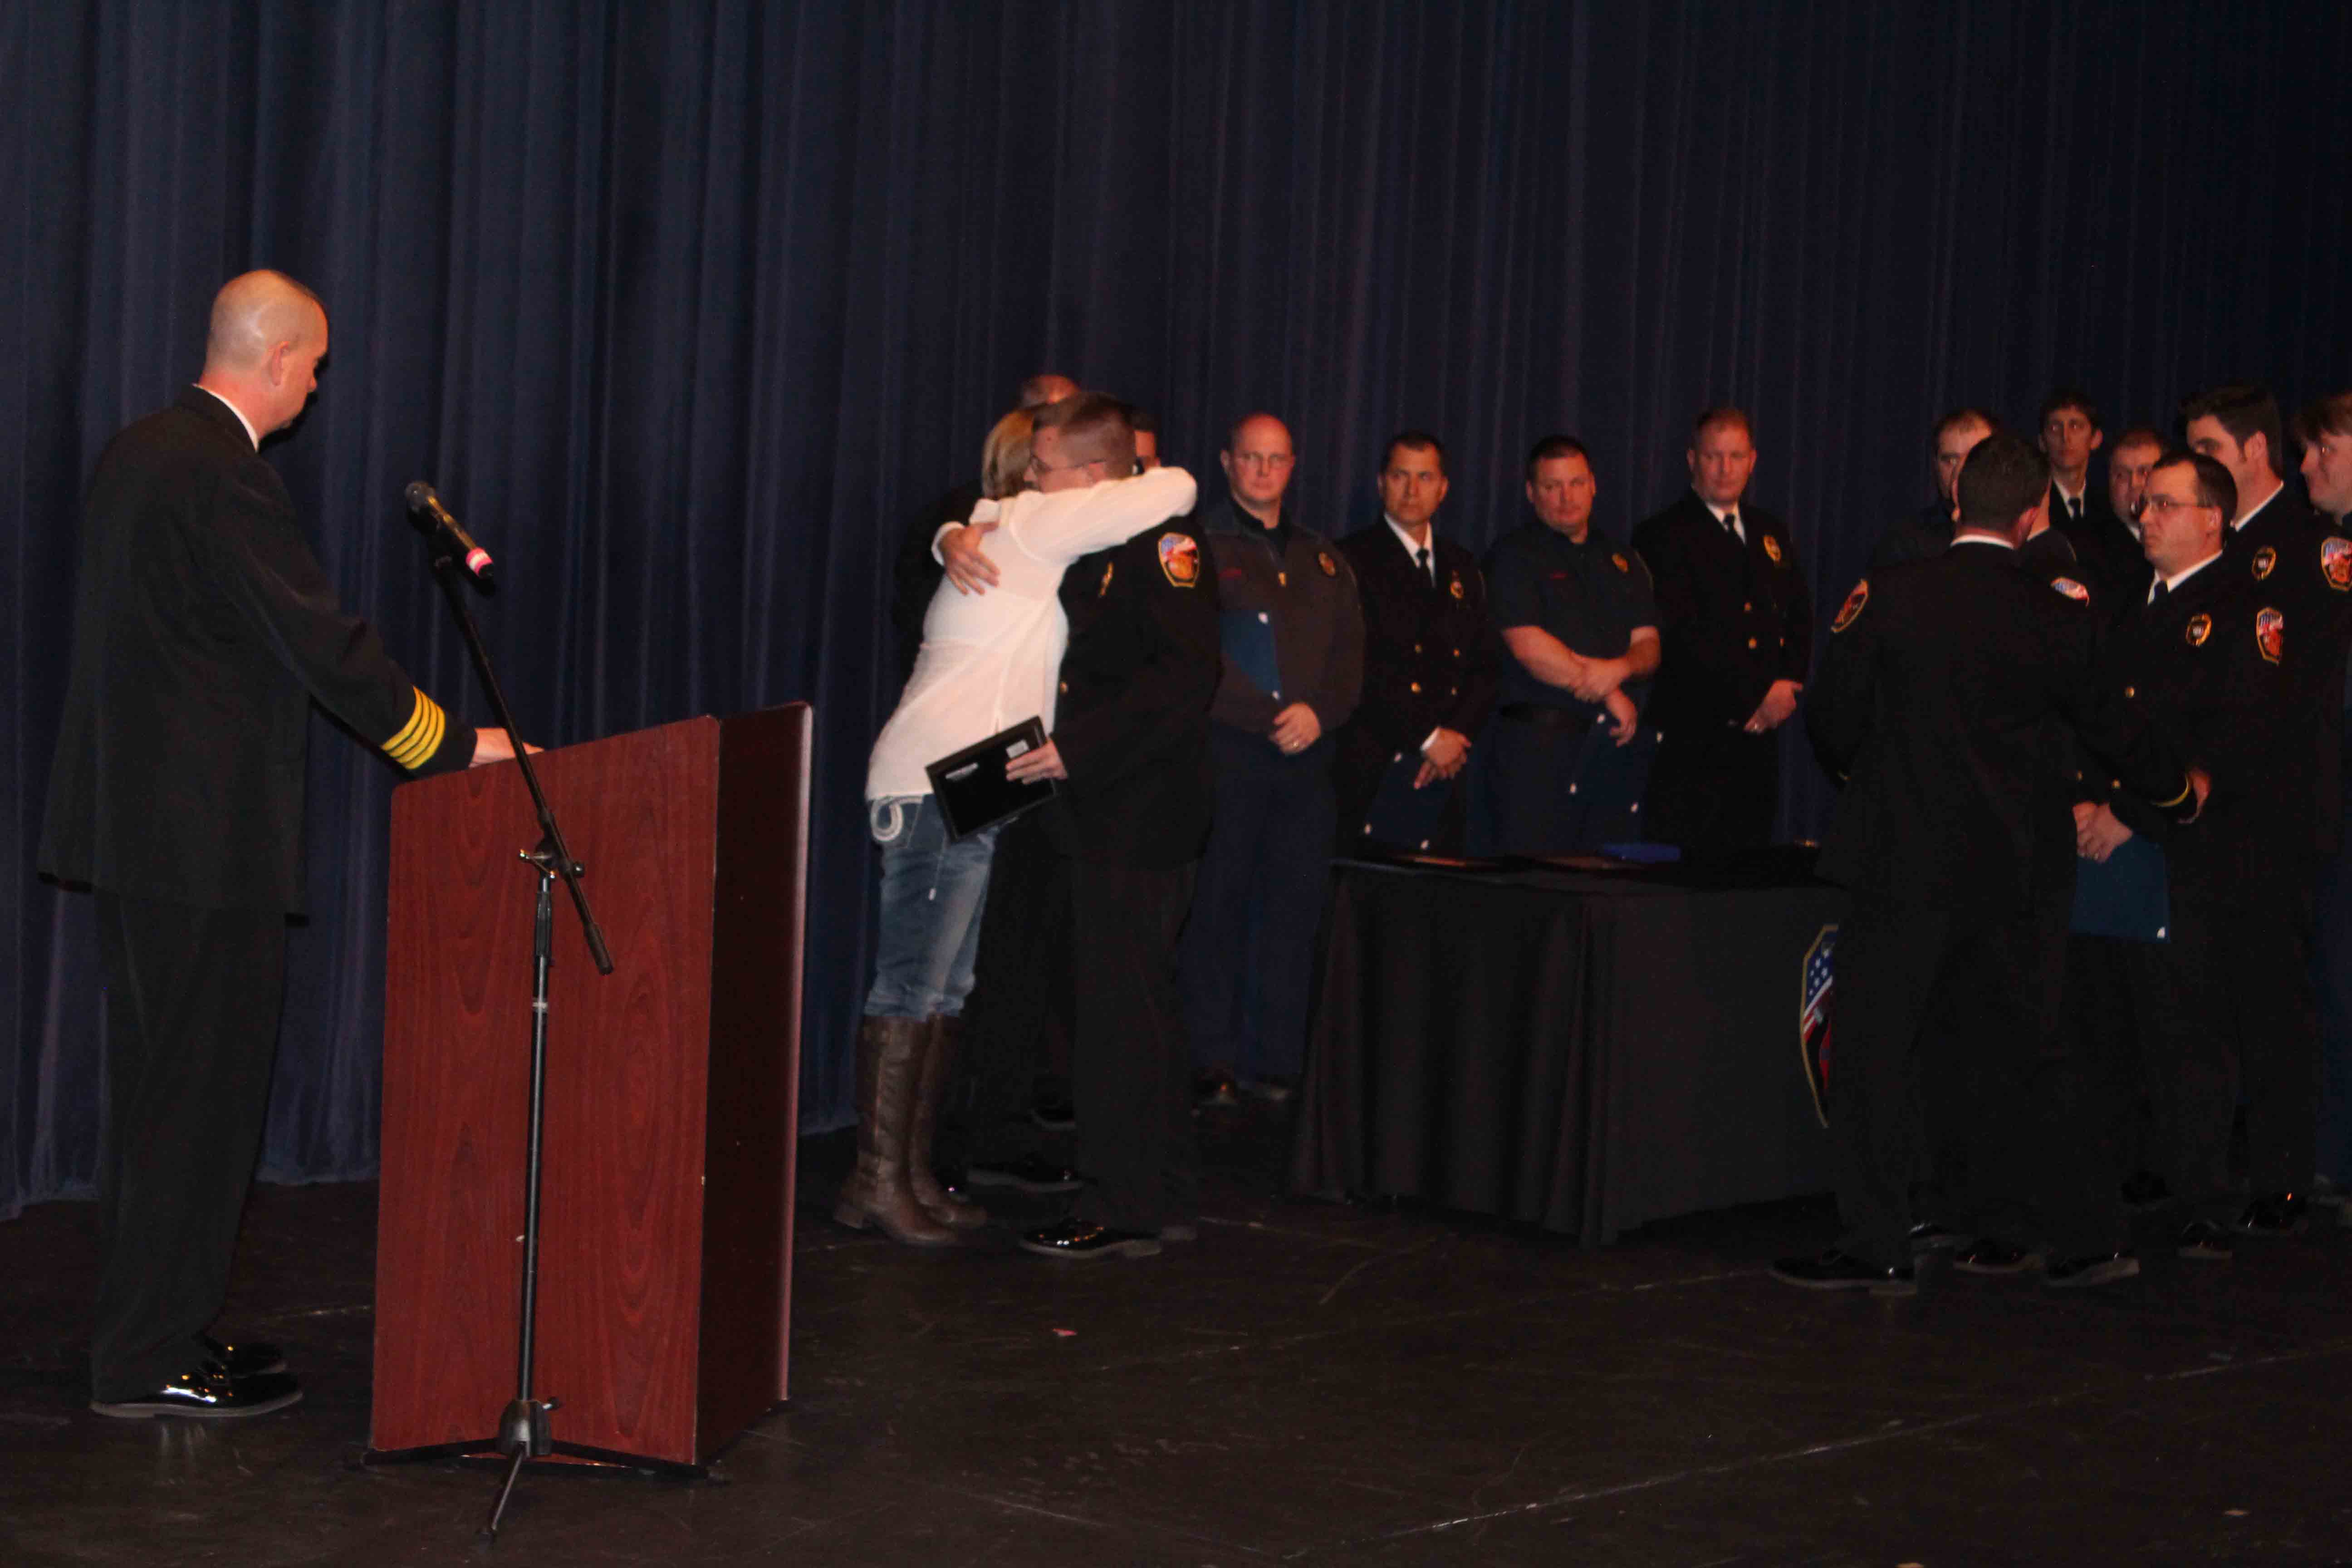 Fire Department Ceremony Celebrates Accomplishments